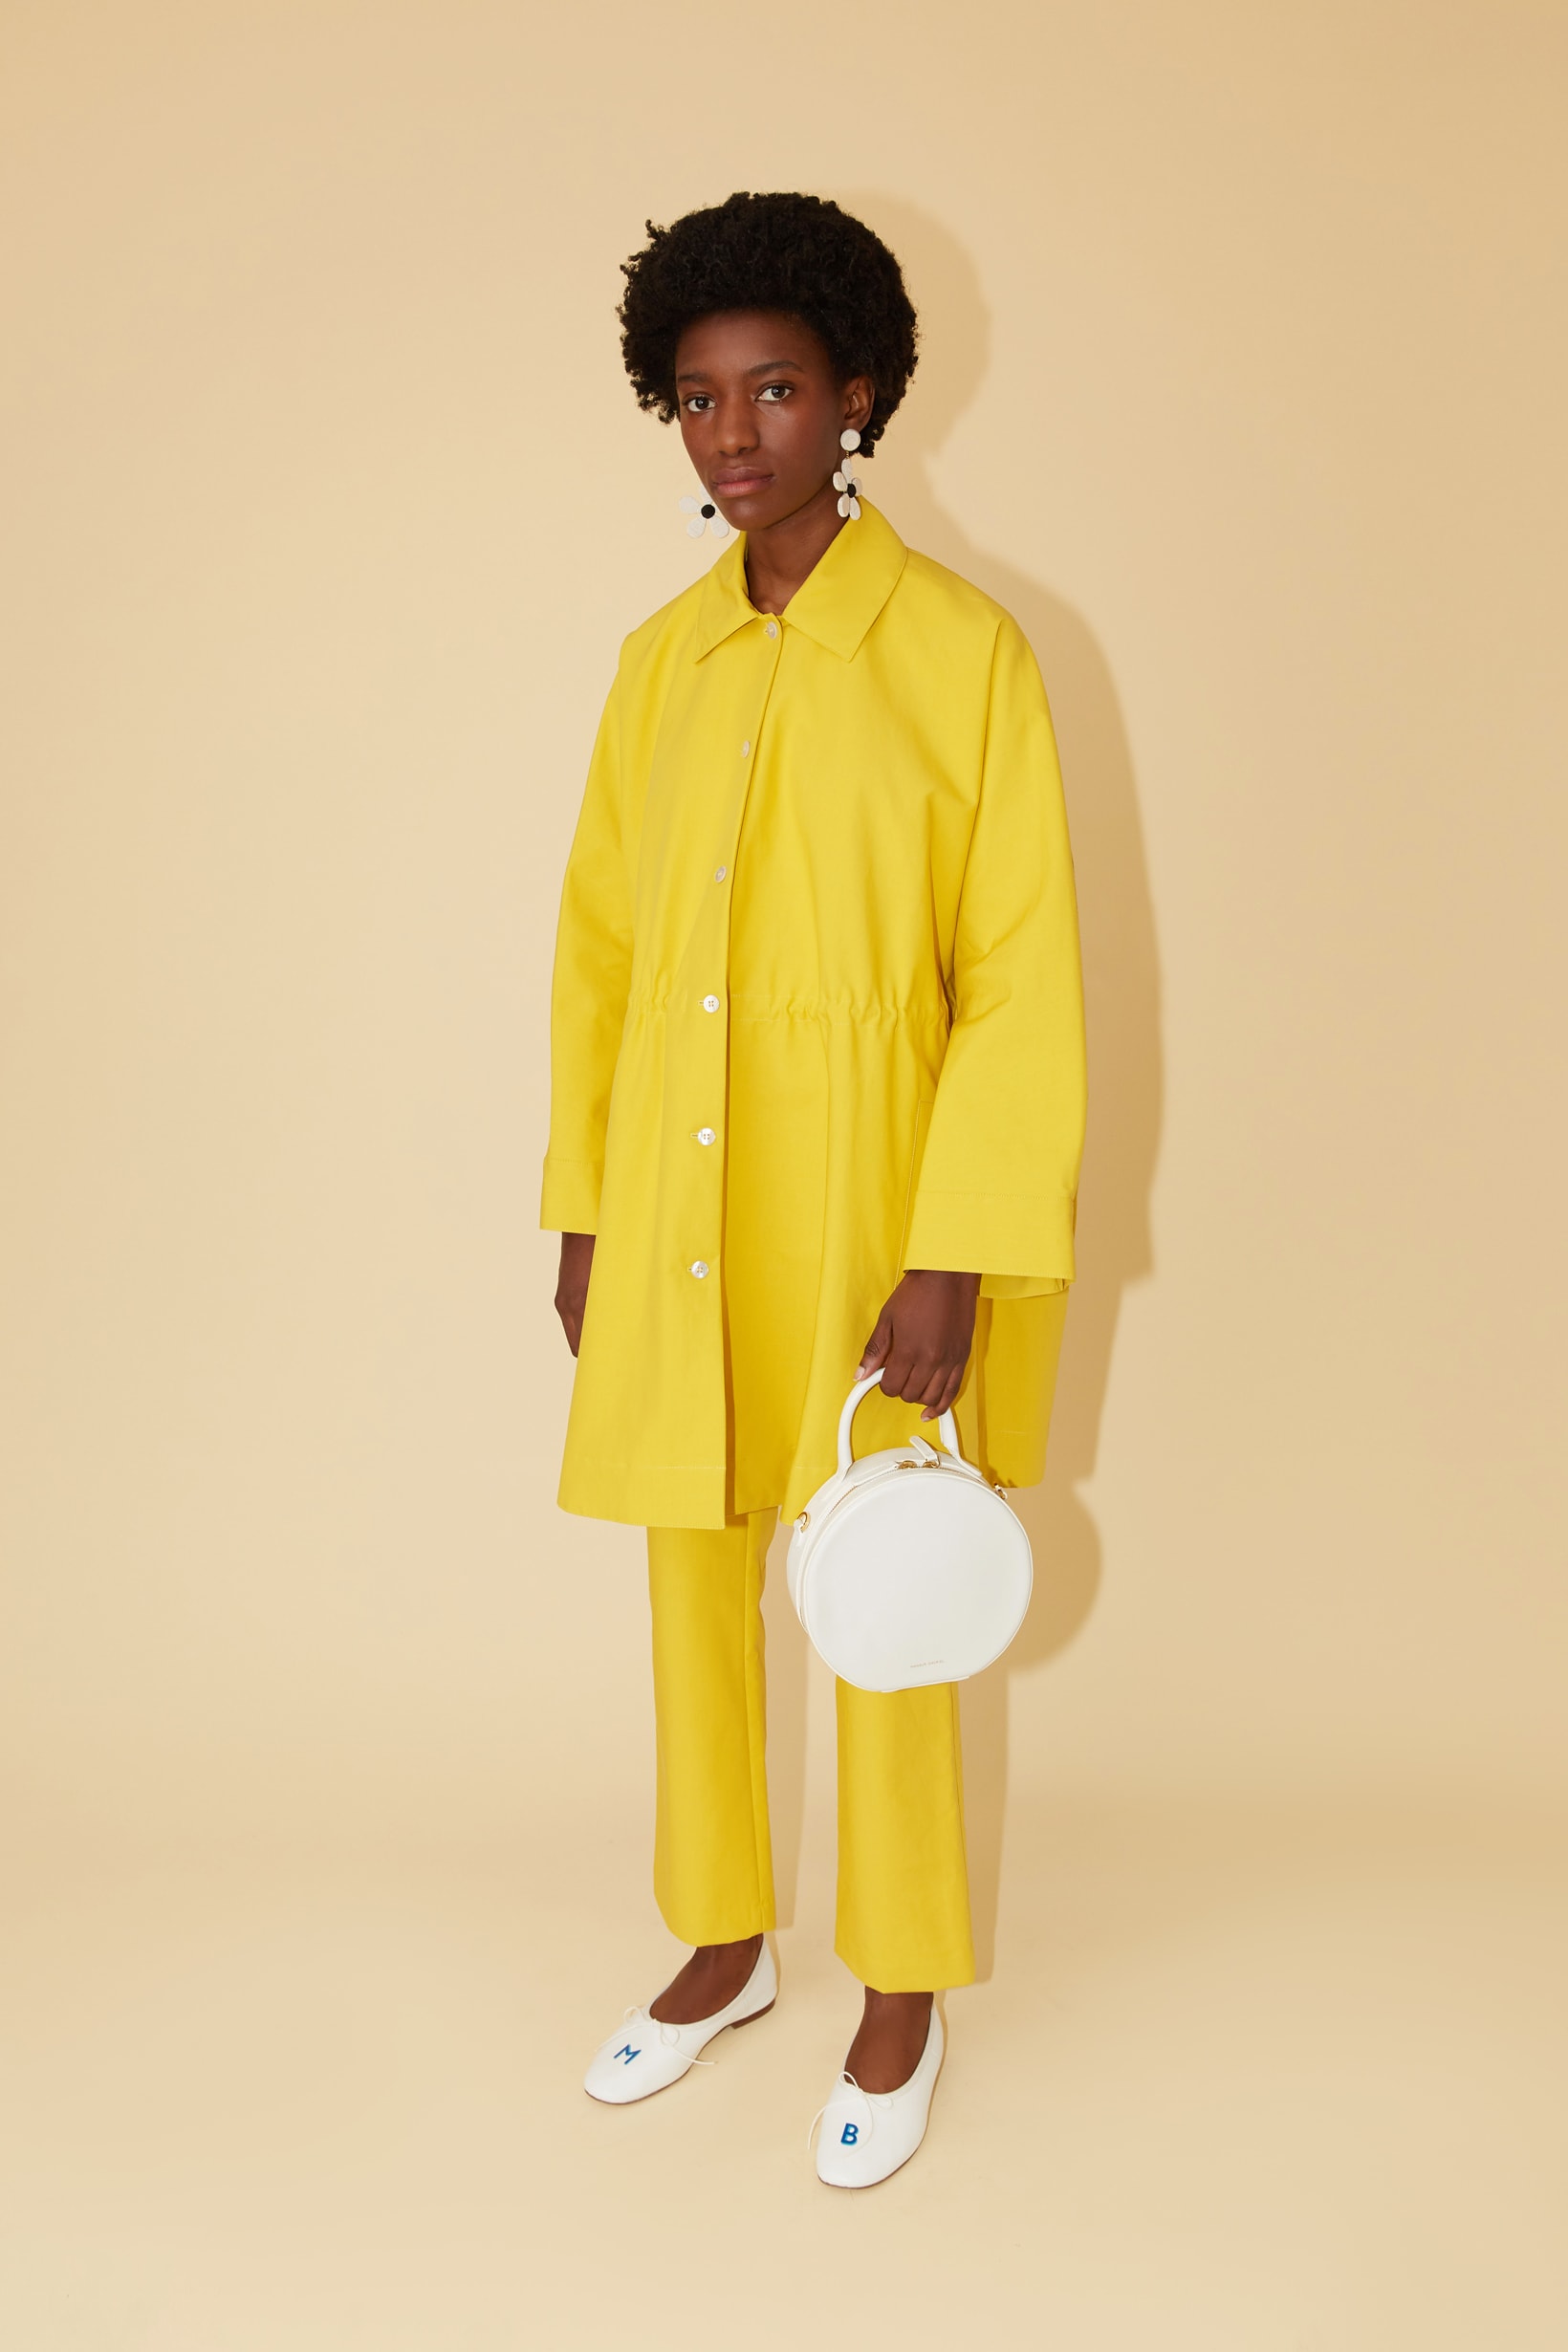 Mansur Gavriel Spring Summer 2019 Lookbook Jacket Pants Yellow